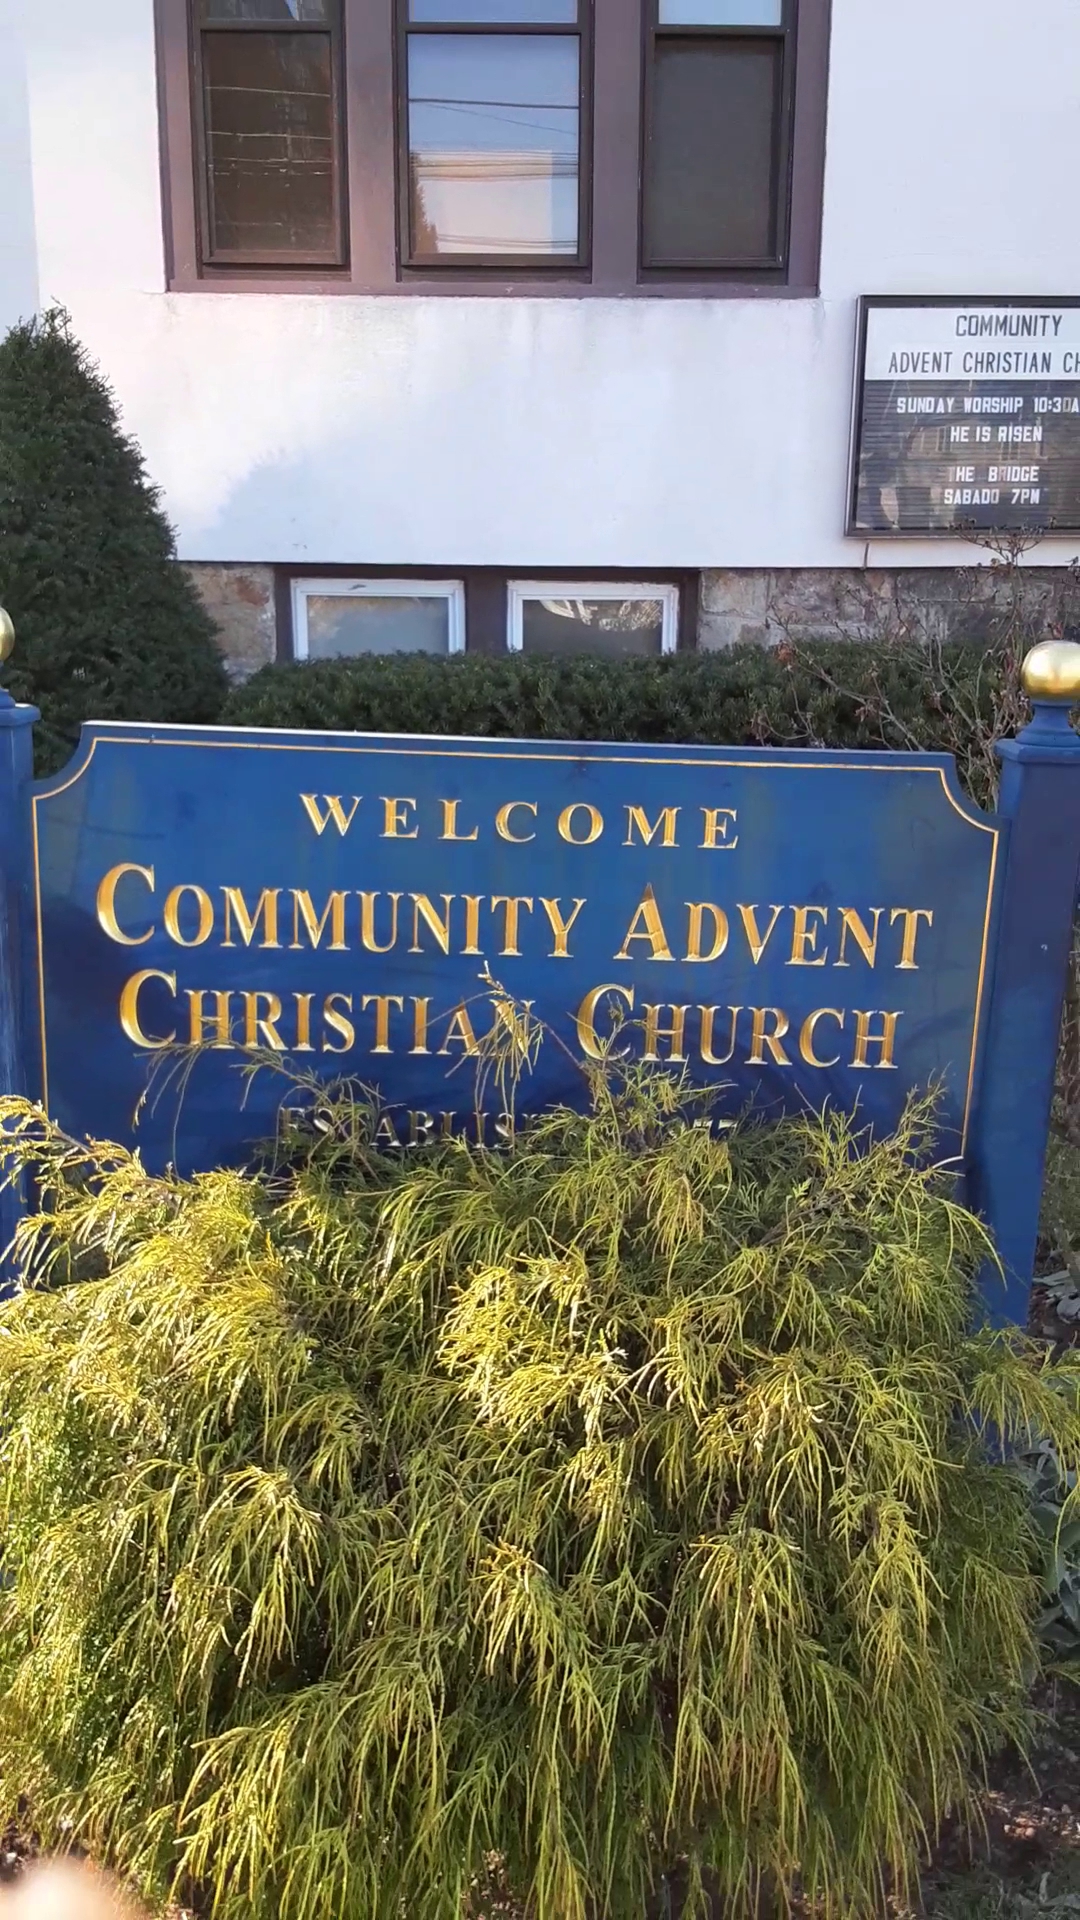 Community Advent Christian Church